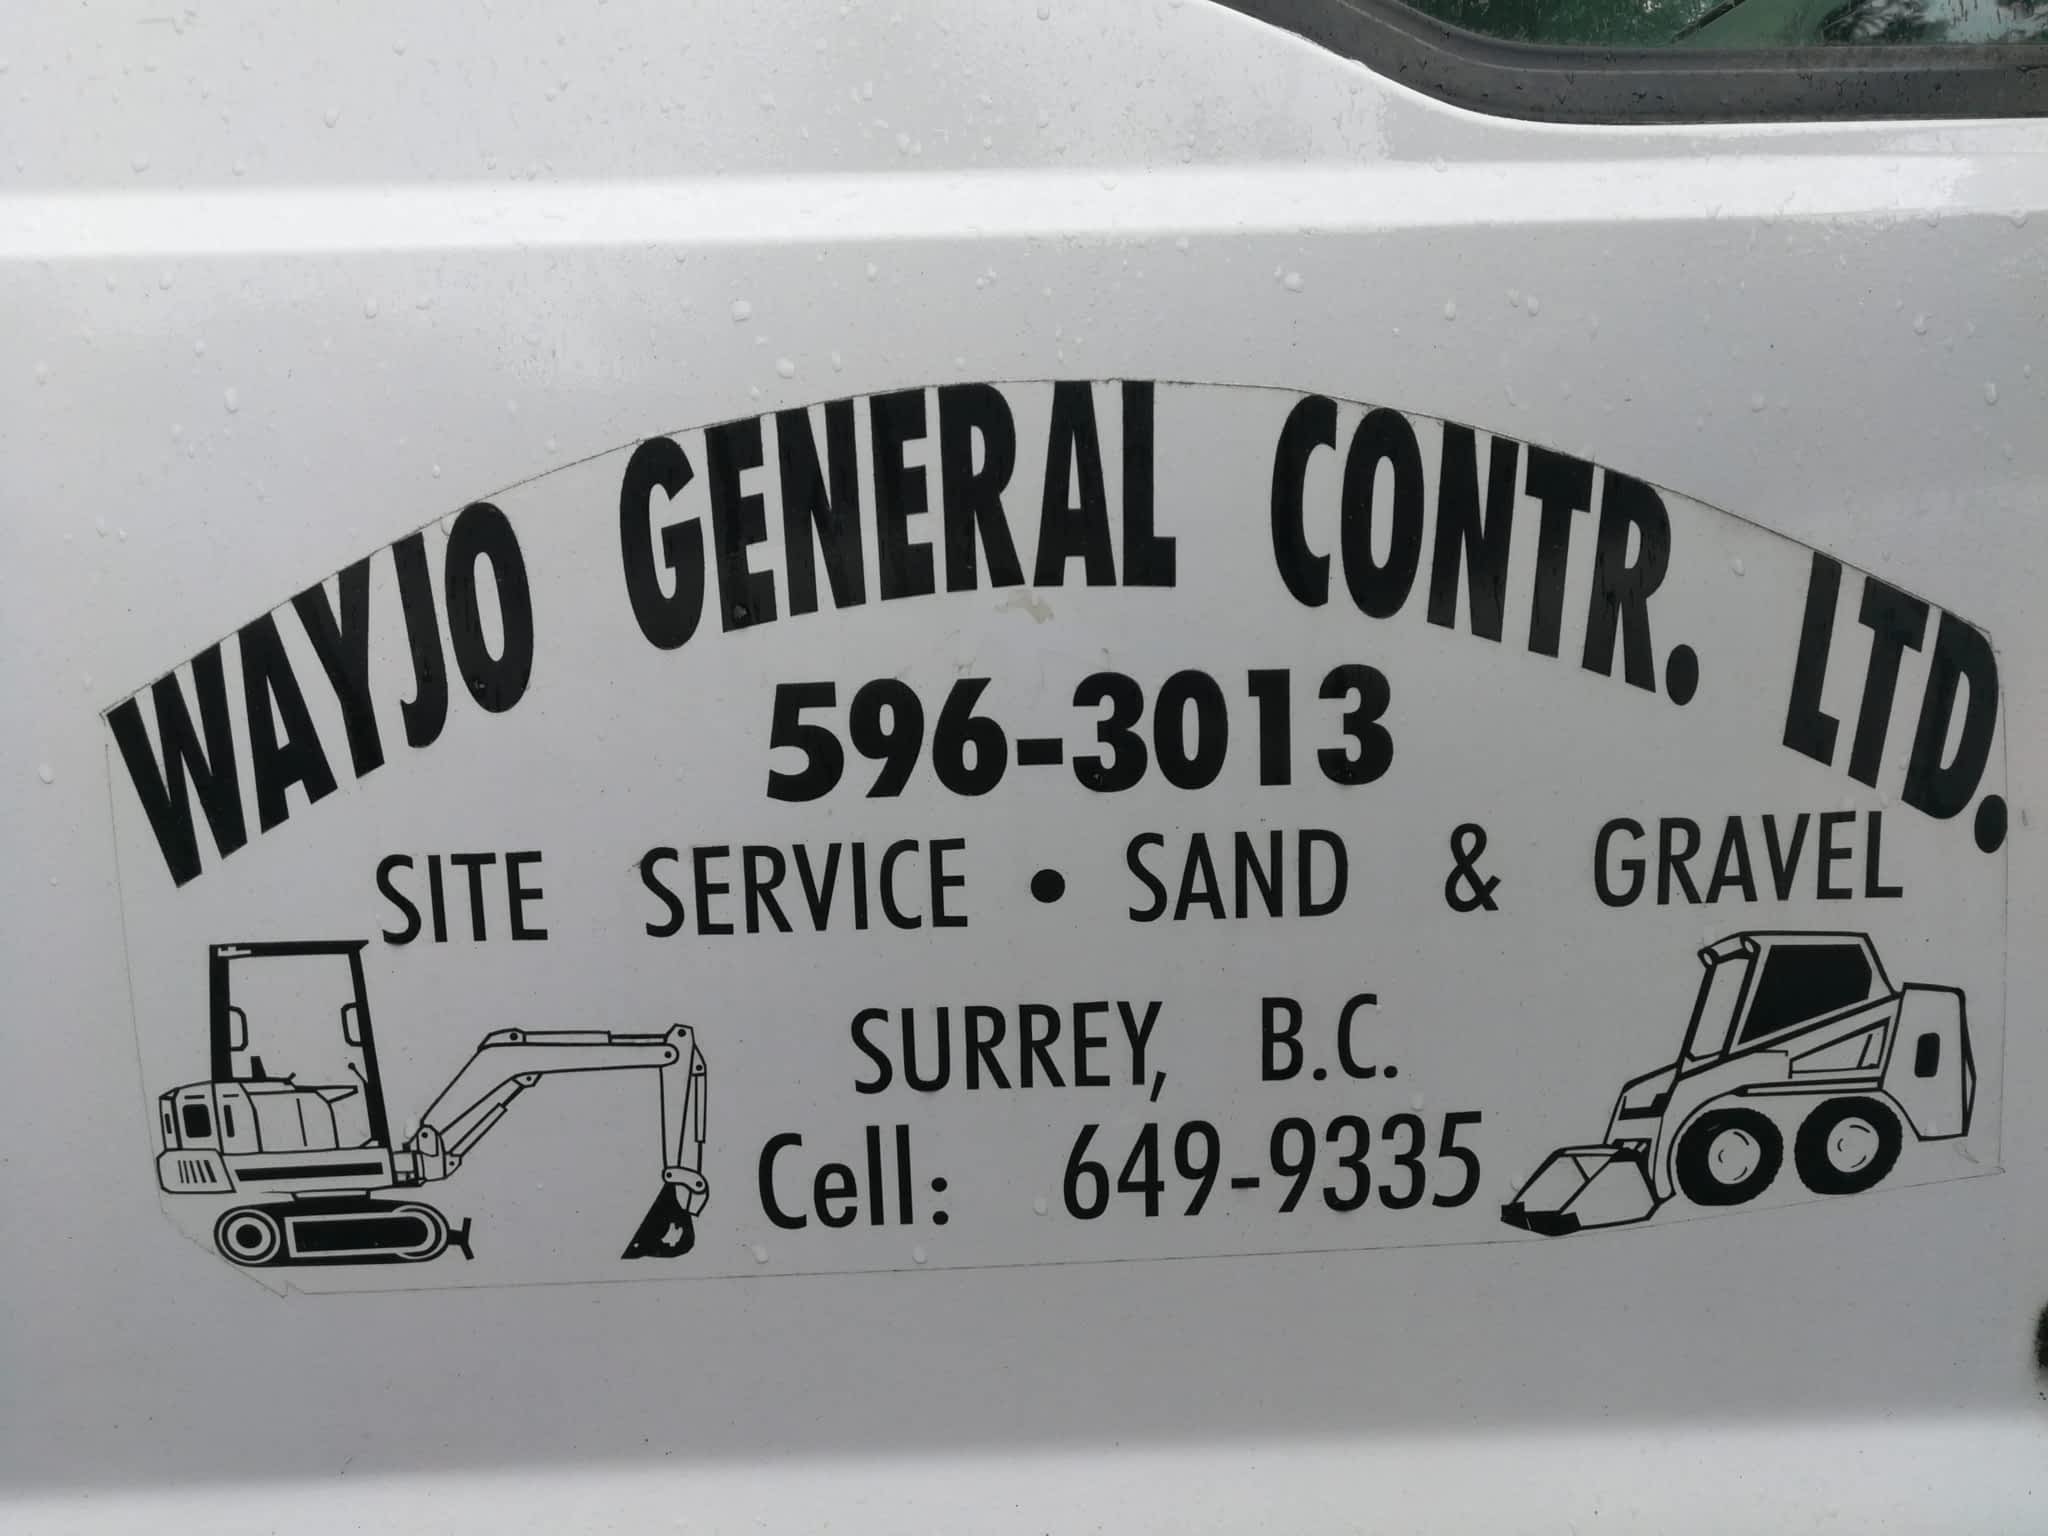 photo Wayjo General Contracting Ltd